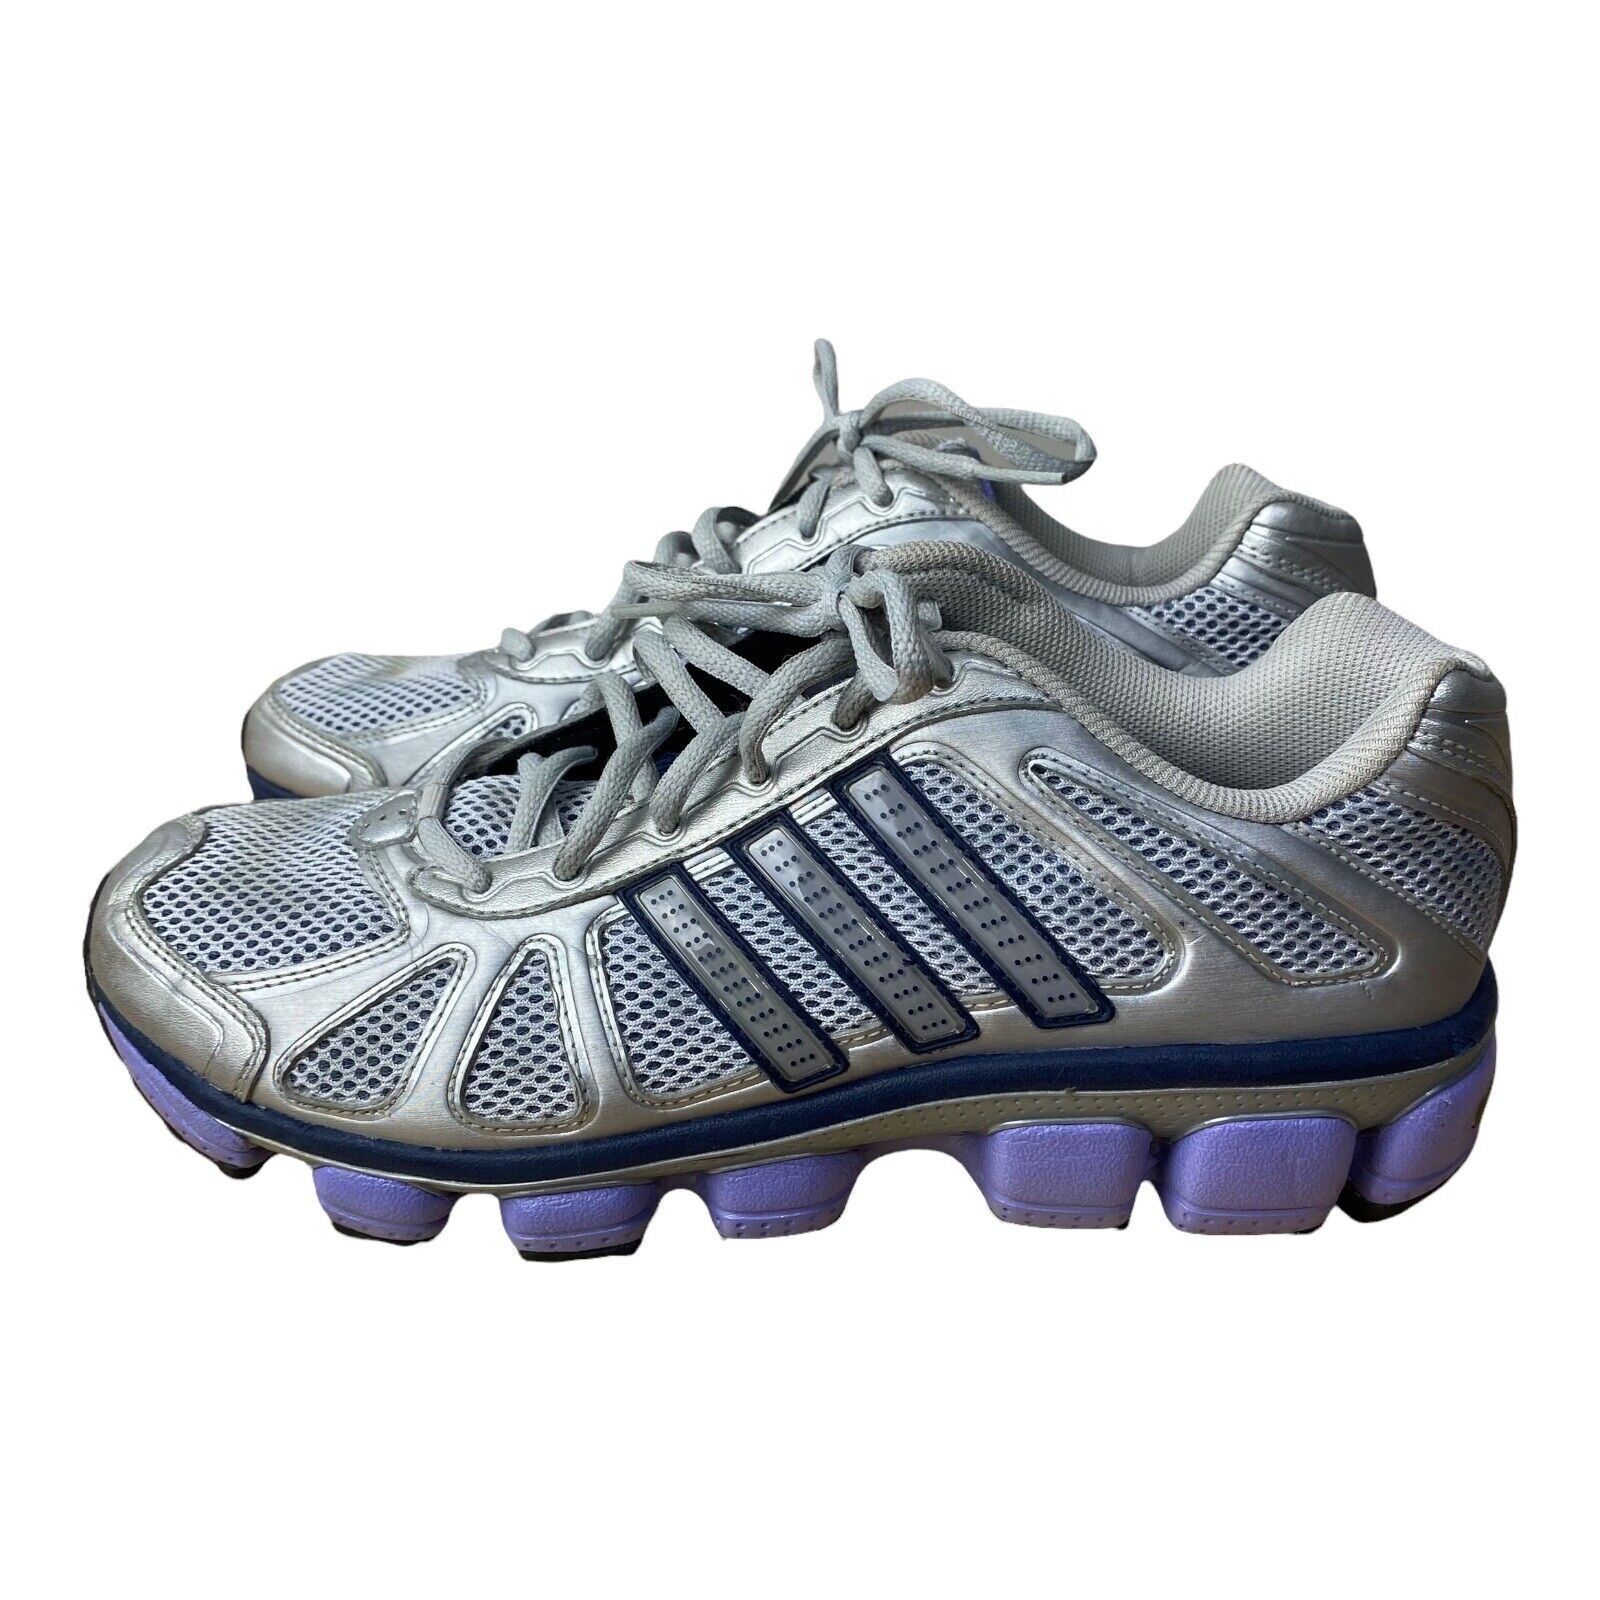 Adidas Shoes 3D Cushion Adiprene Size Silver Purple Women's | eBay